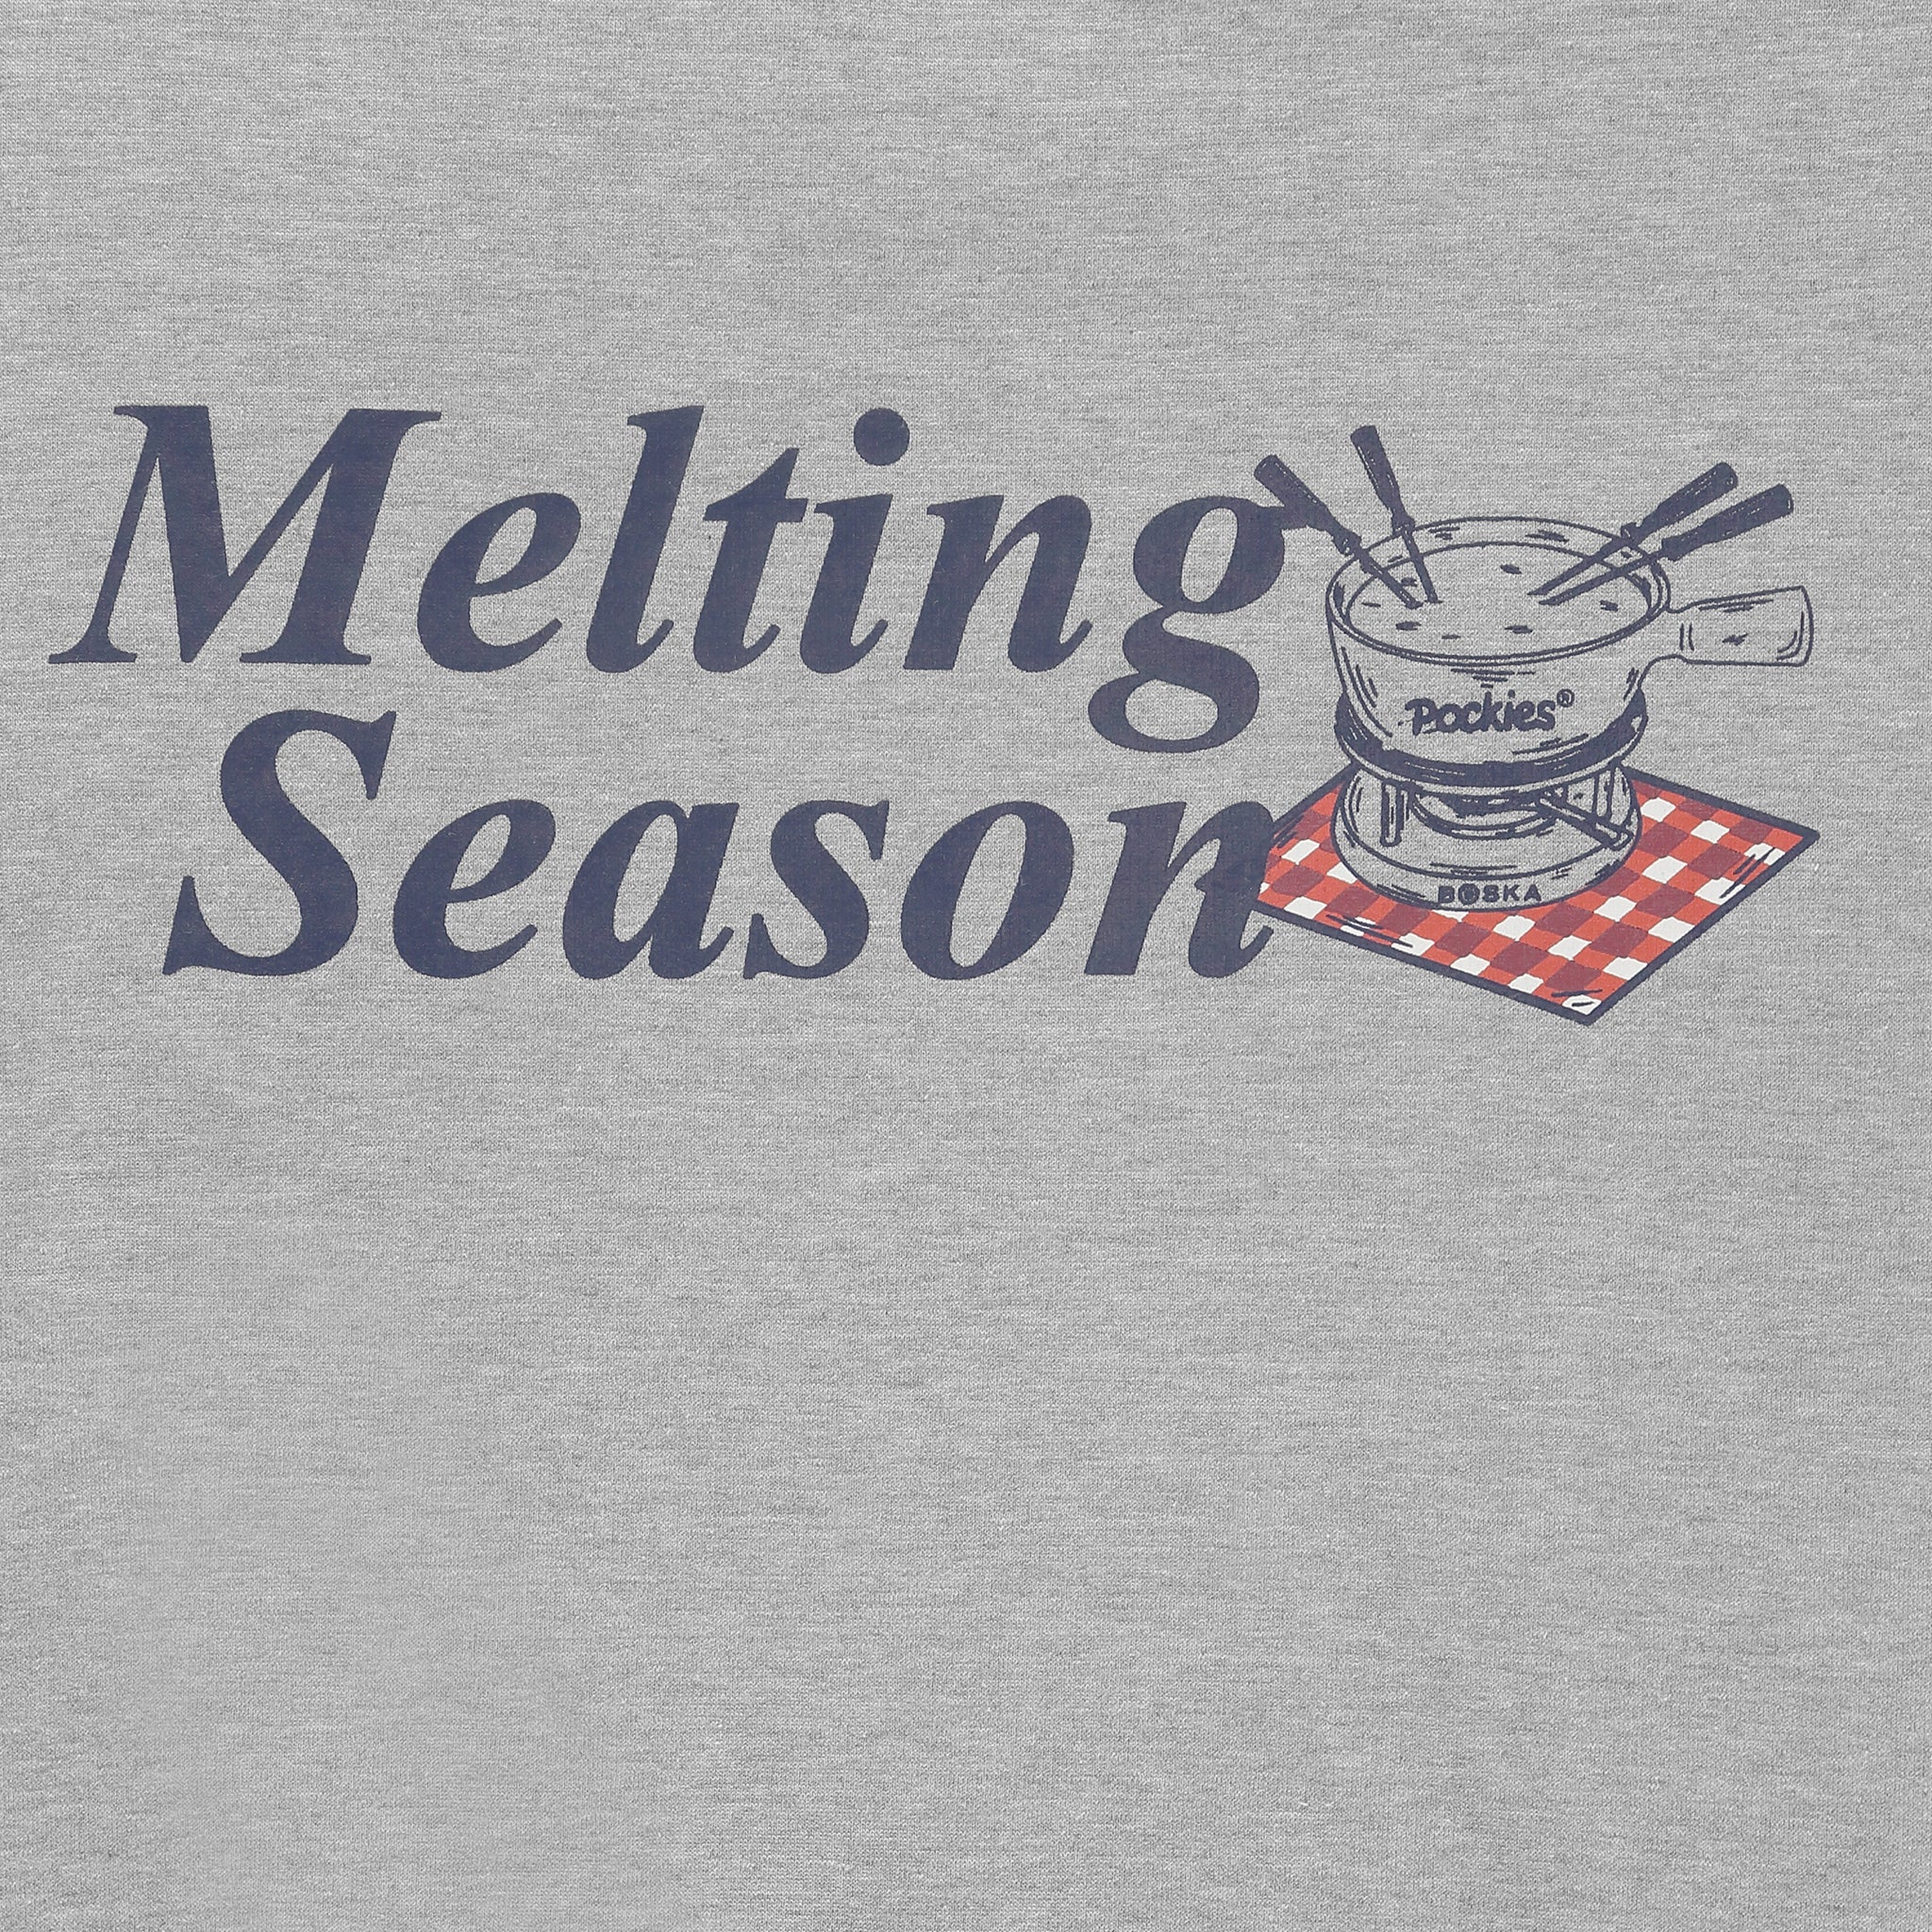 Melting season sweater